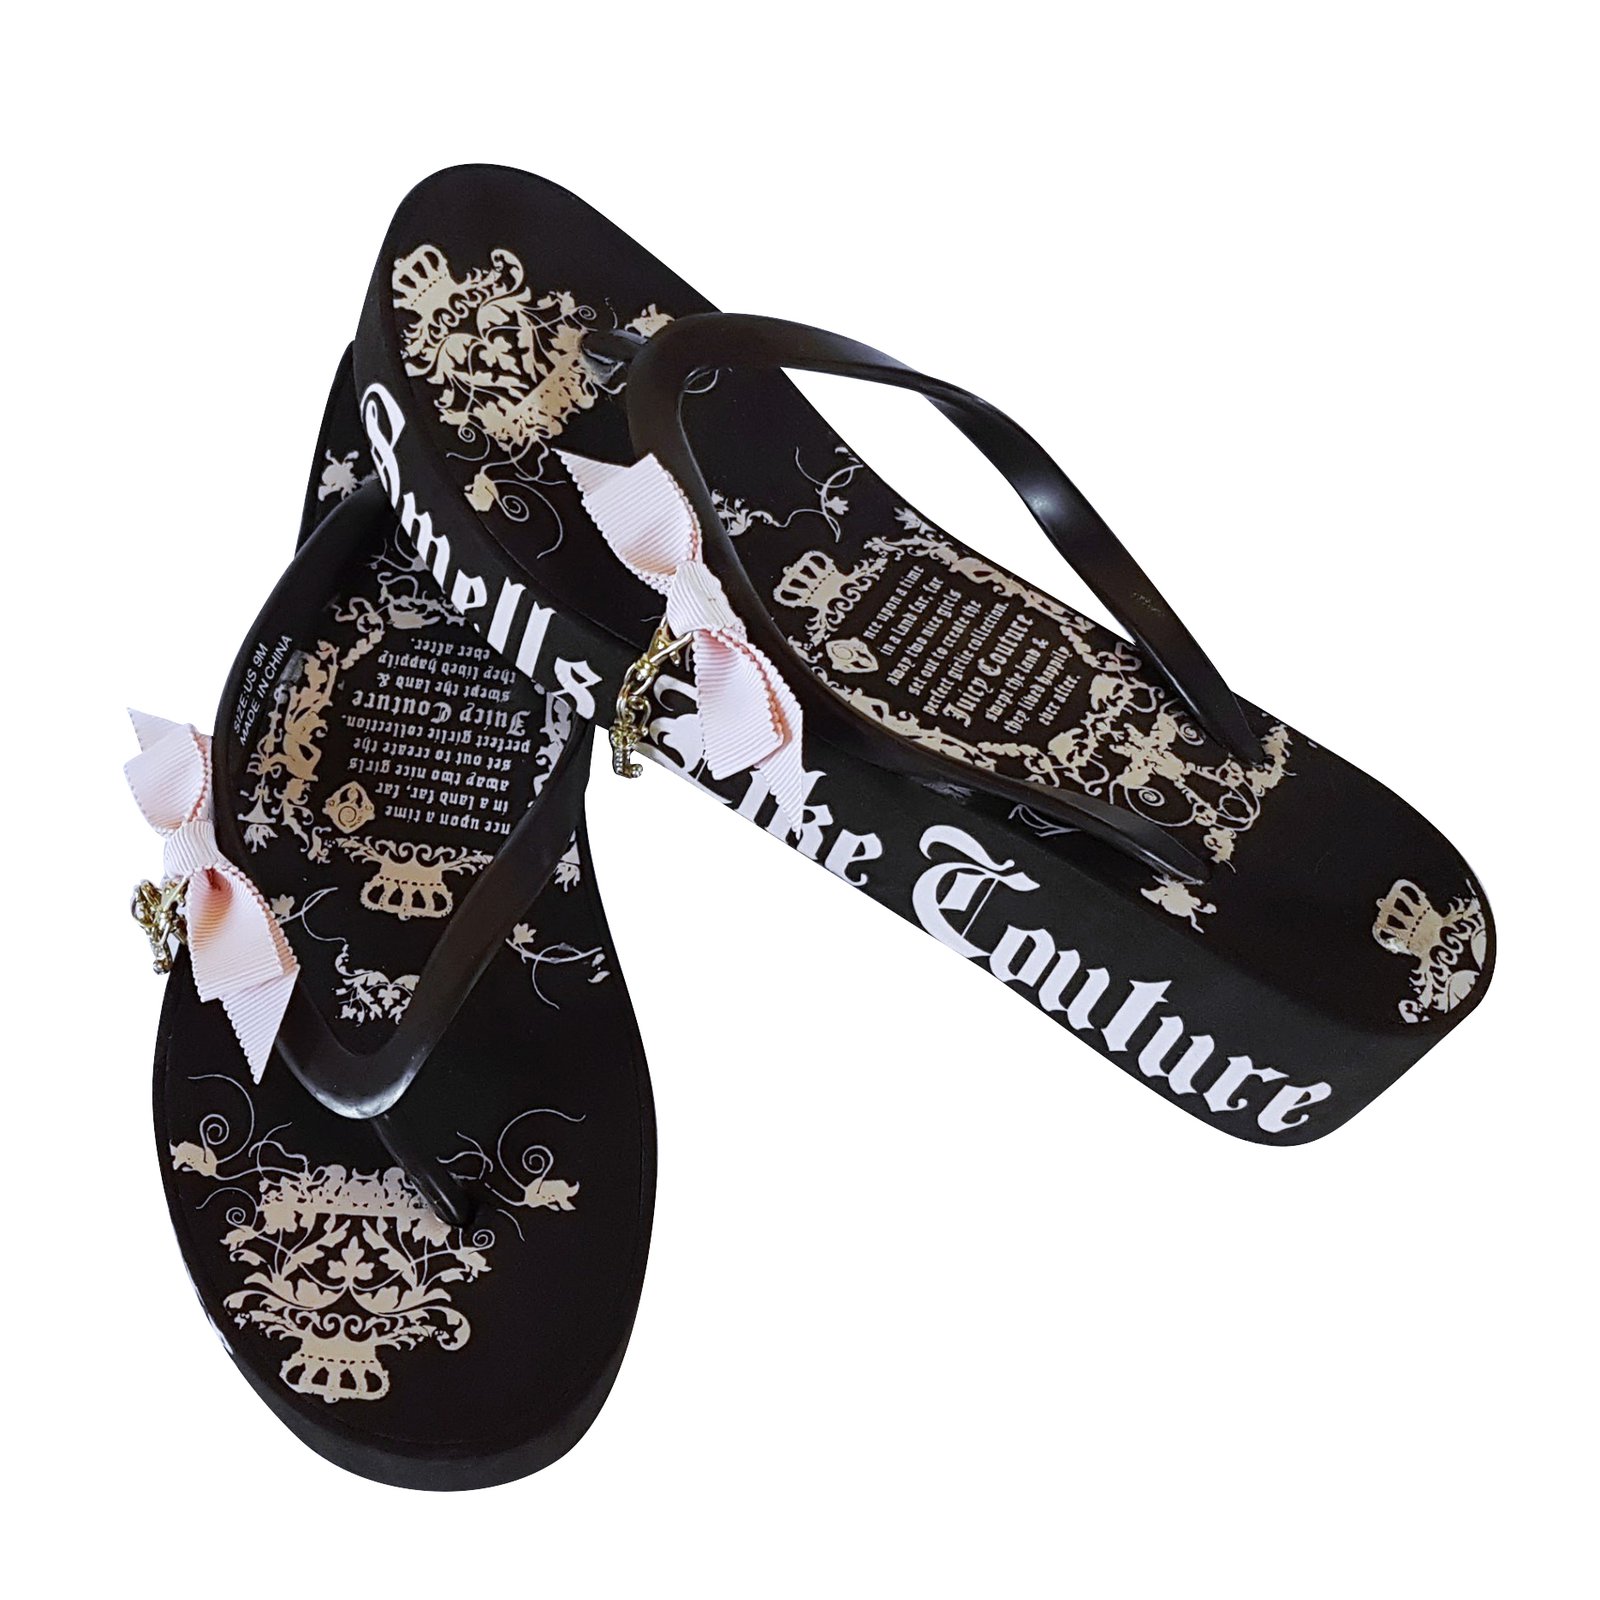 Juicy Couture Flip-Flops Sandals Rubber 